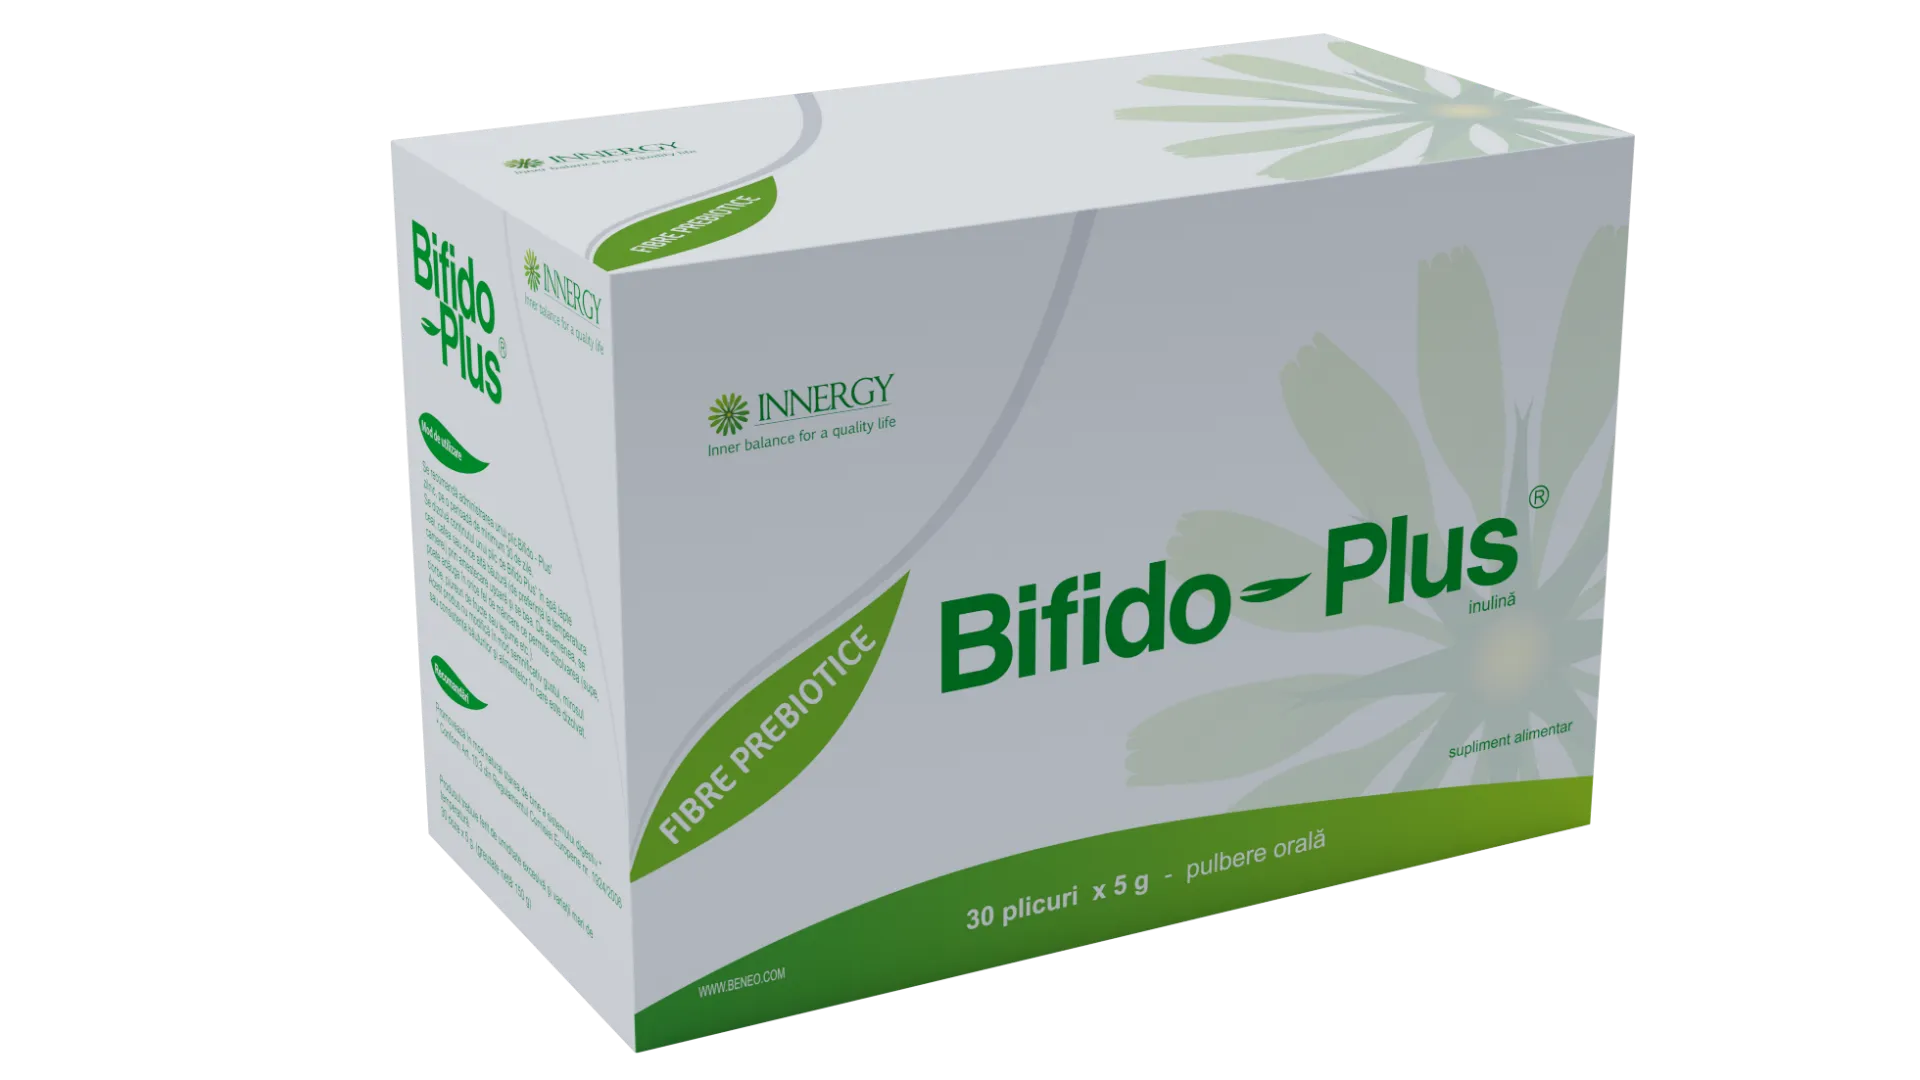 Bifido Plus, 30 plicuri, Innergy